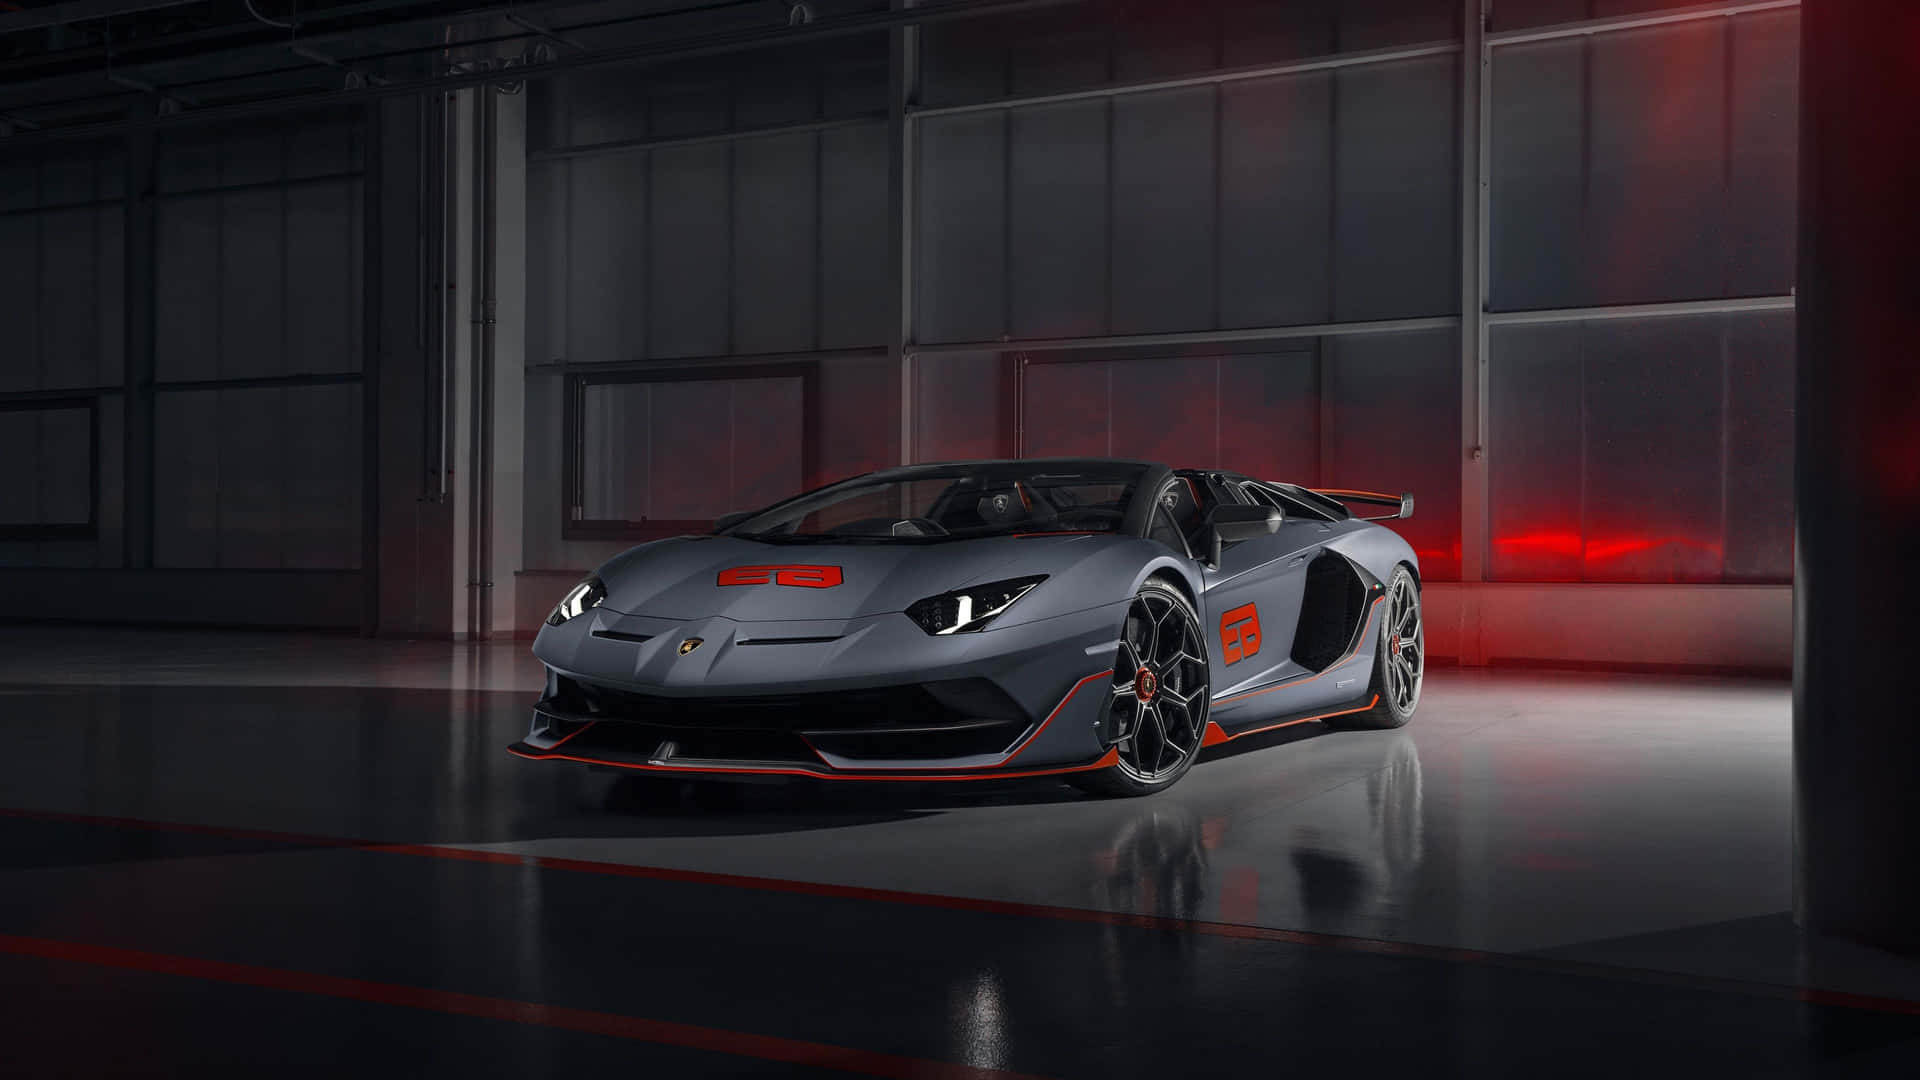 The Lamborghini Huracan Gts Is Shown In A Dark Room